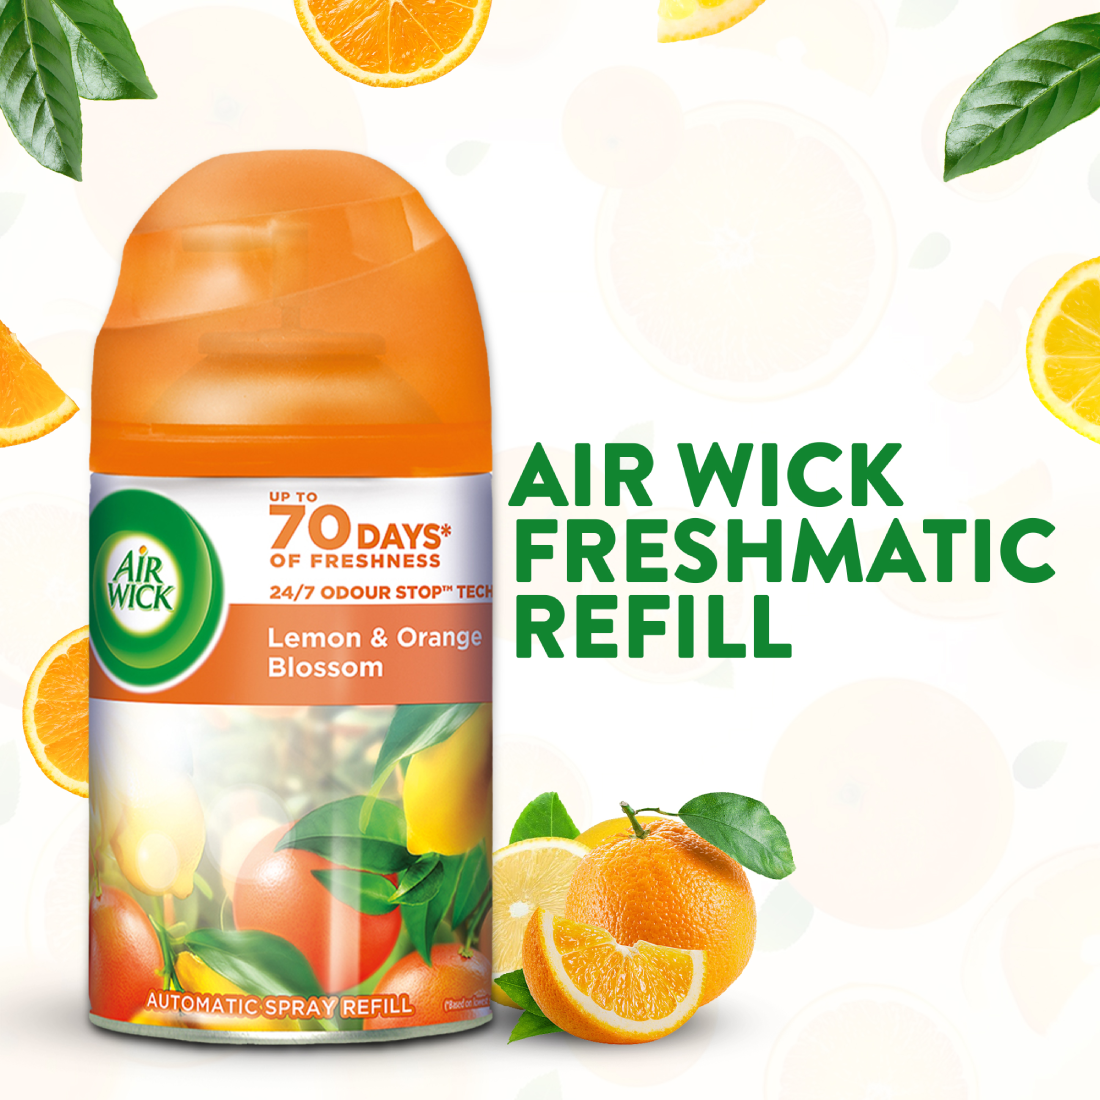 Air Wick Freshmatic Refill, Nagpur Narangi, Lemon & Orange Blossom